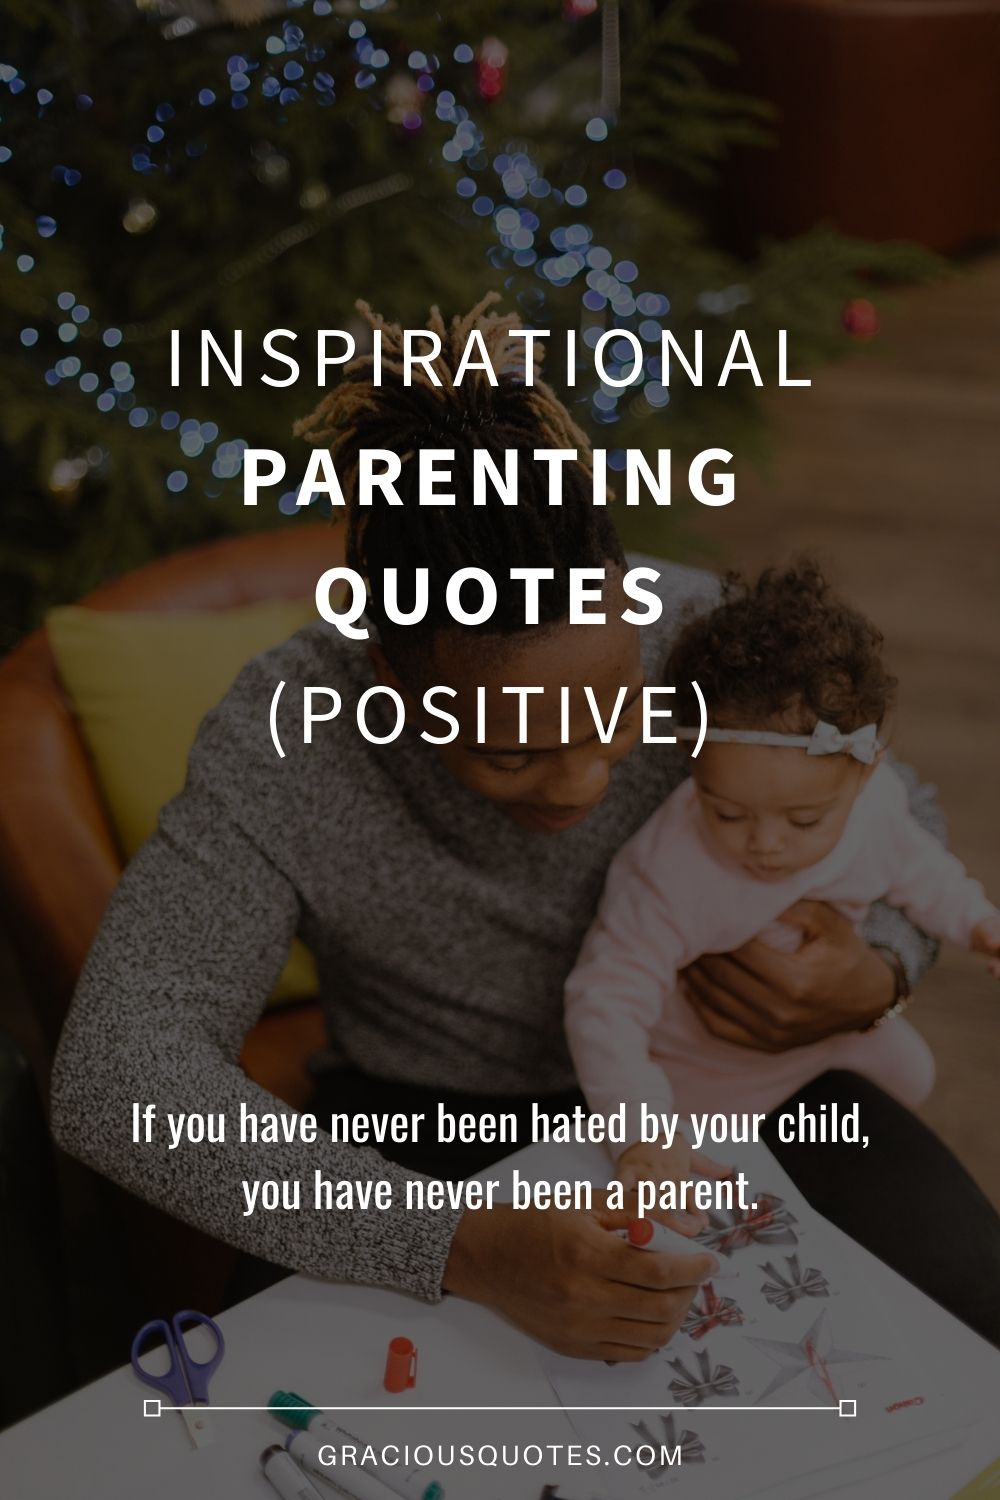 Inspirational Parenting Quotes (POSITIVE) - Gracious Quotes